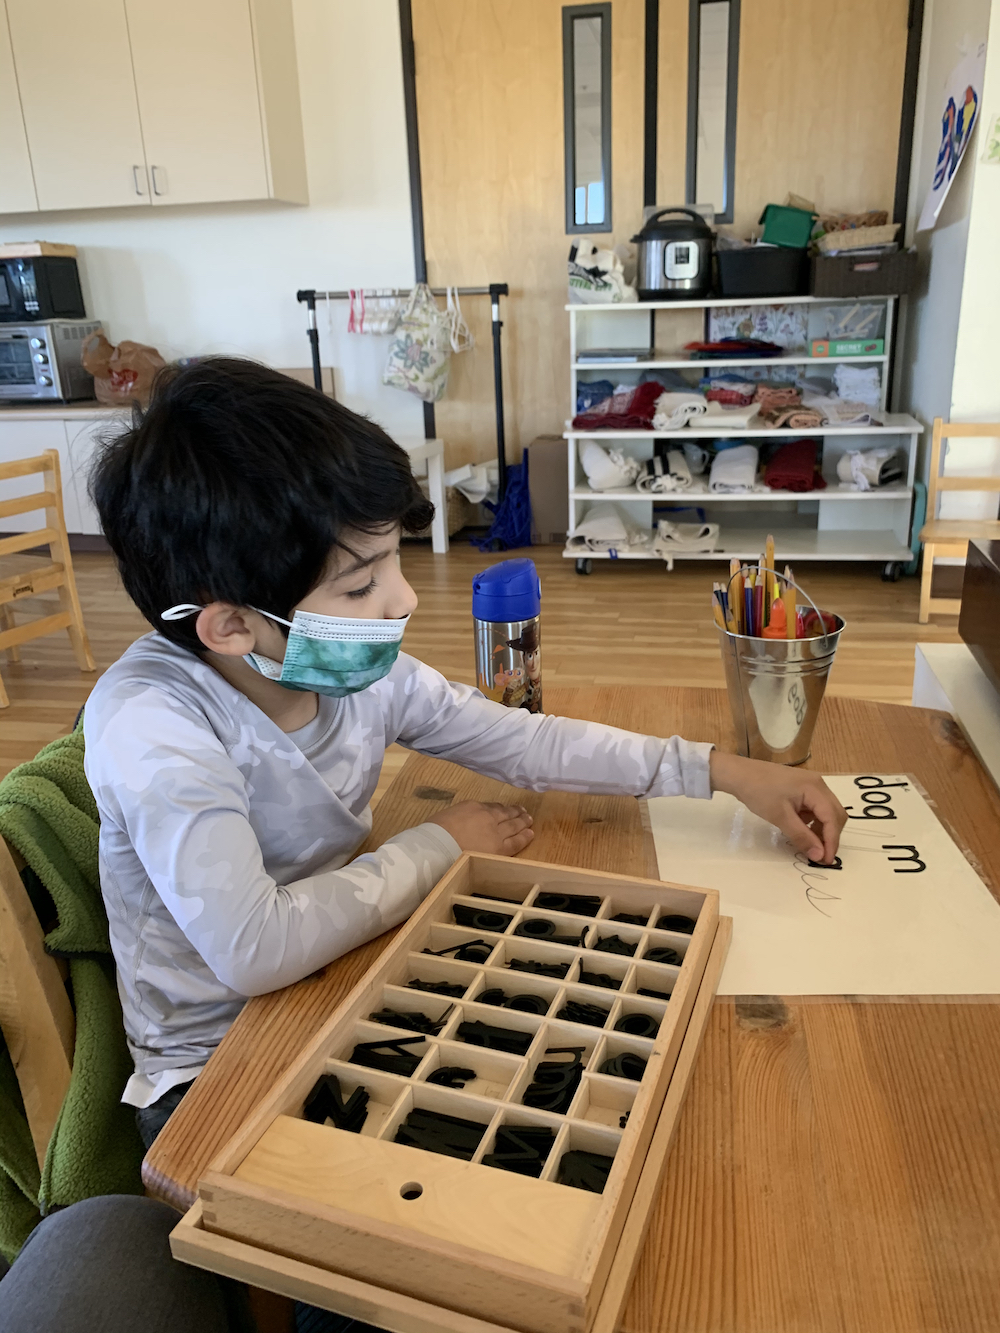 Elementary Montessori Child Working on Writing Skills Independently